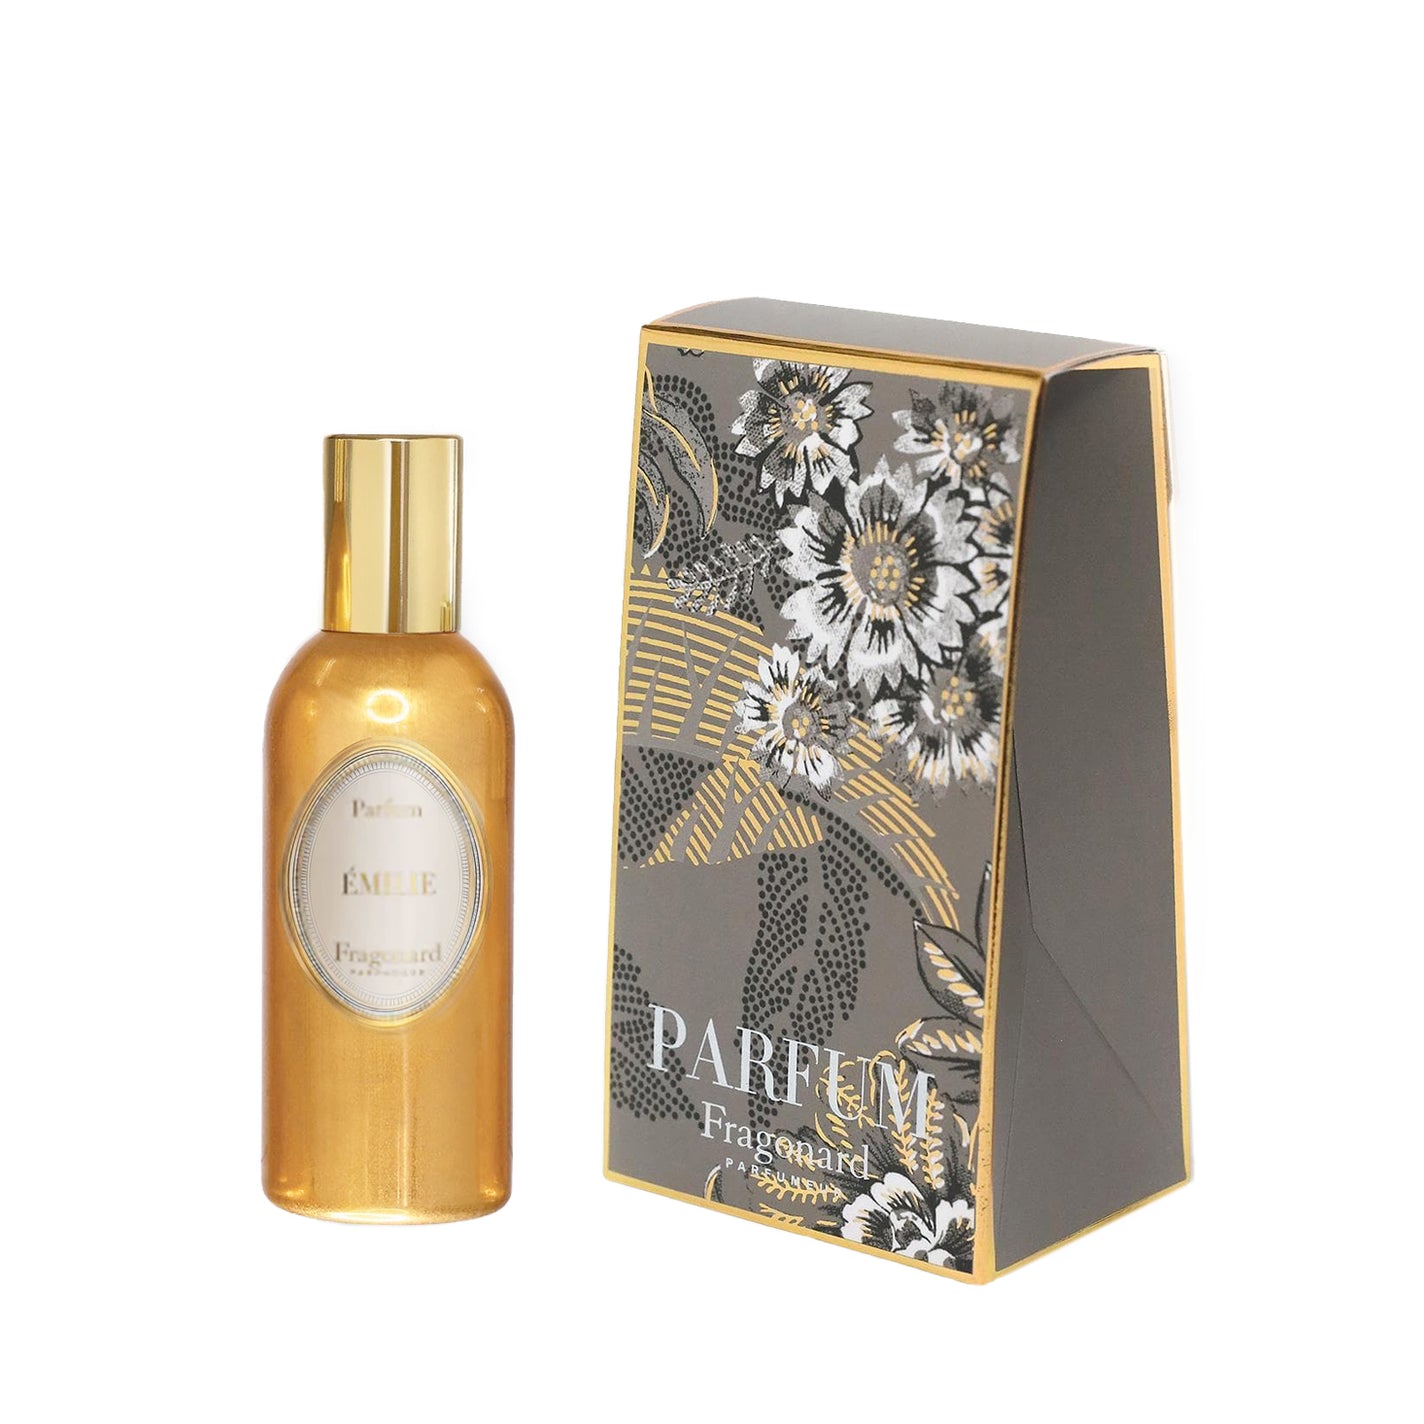 Fragonard Emilie 'Estagon' Parfum - 60ml